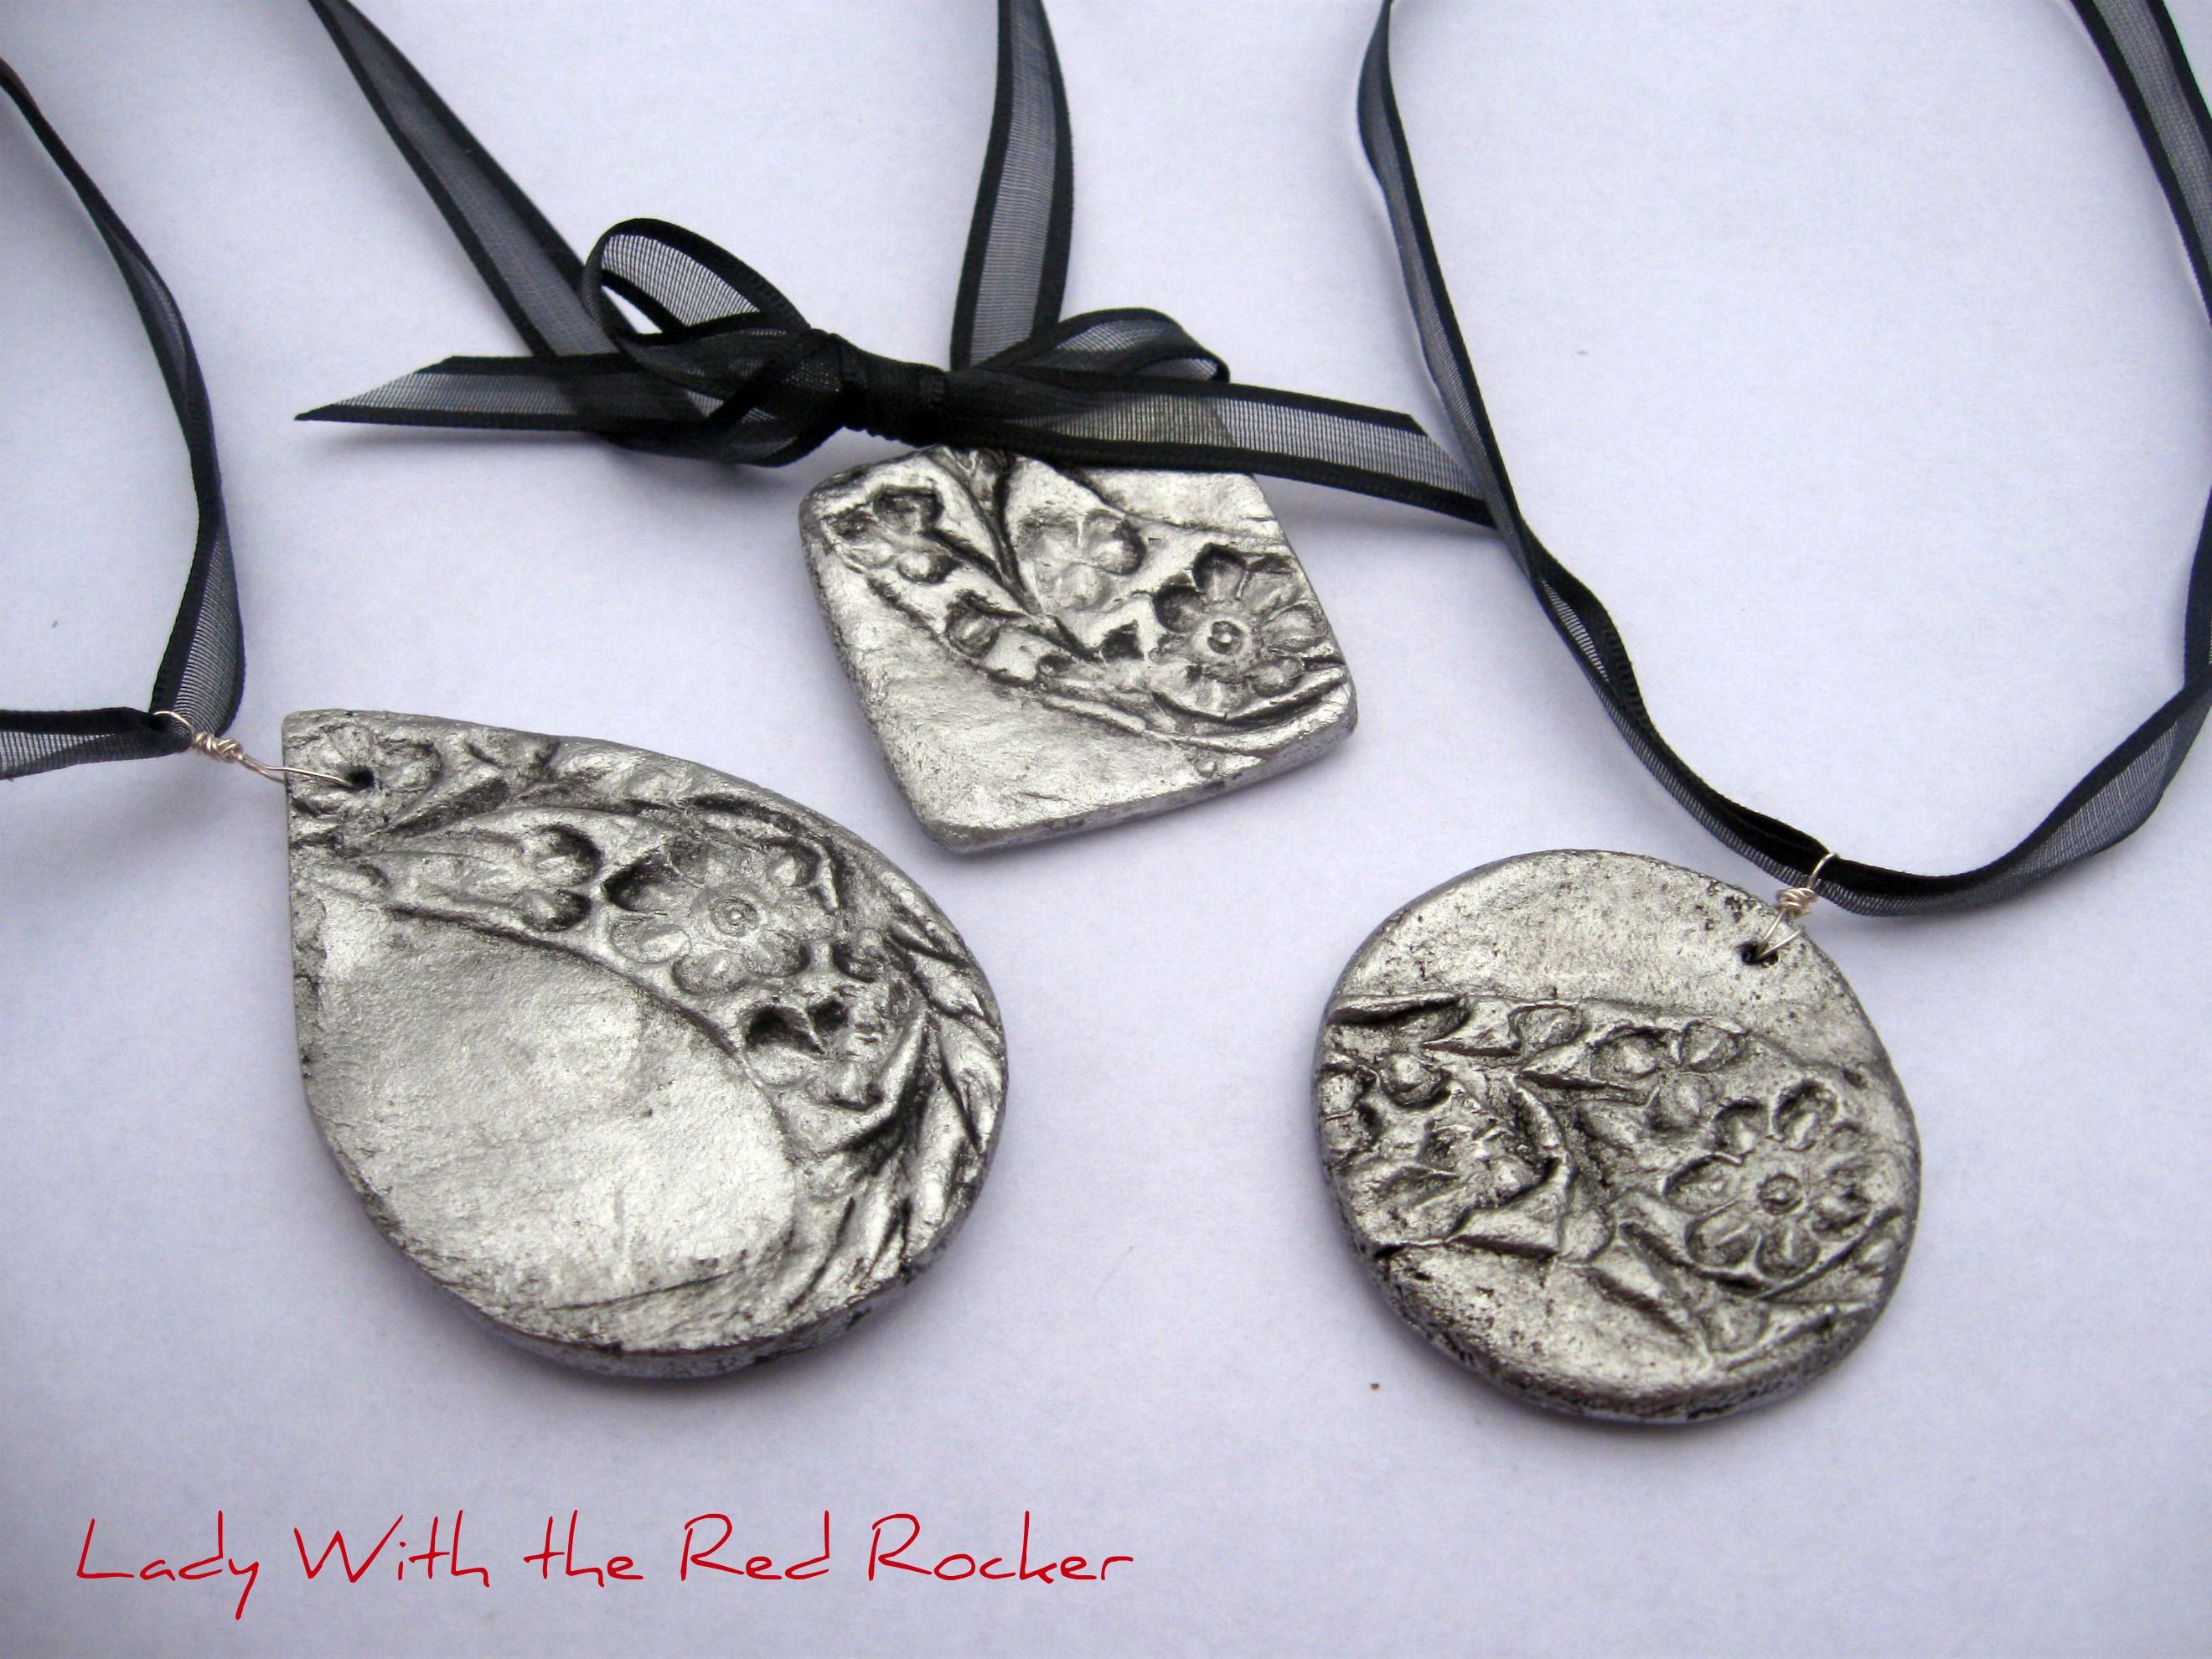 http://ladywiththeredrocker.com/wp-content/uploads/2012/01/salt-dough-pendants.jpg